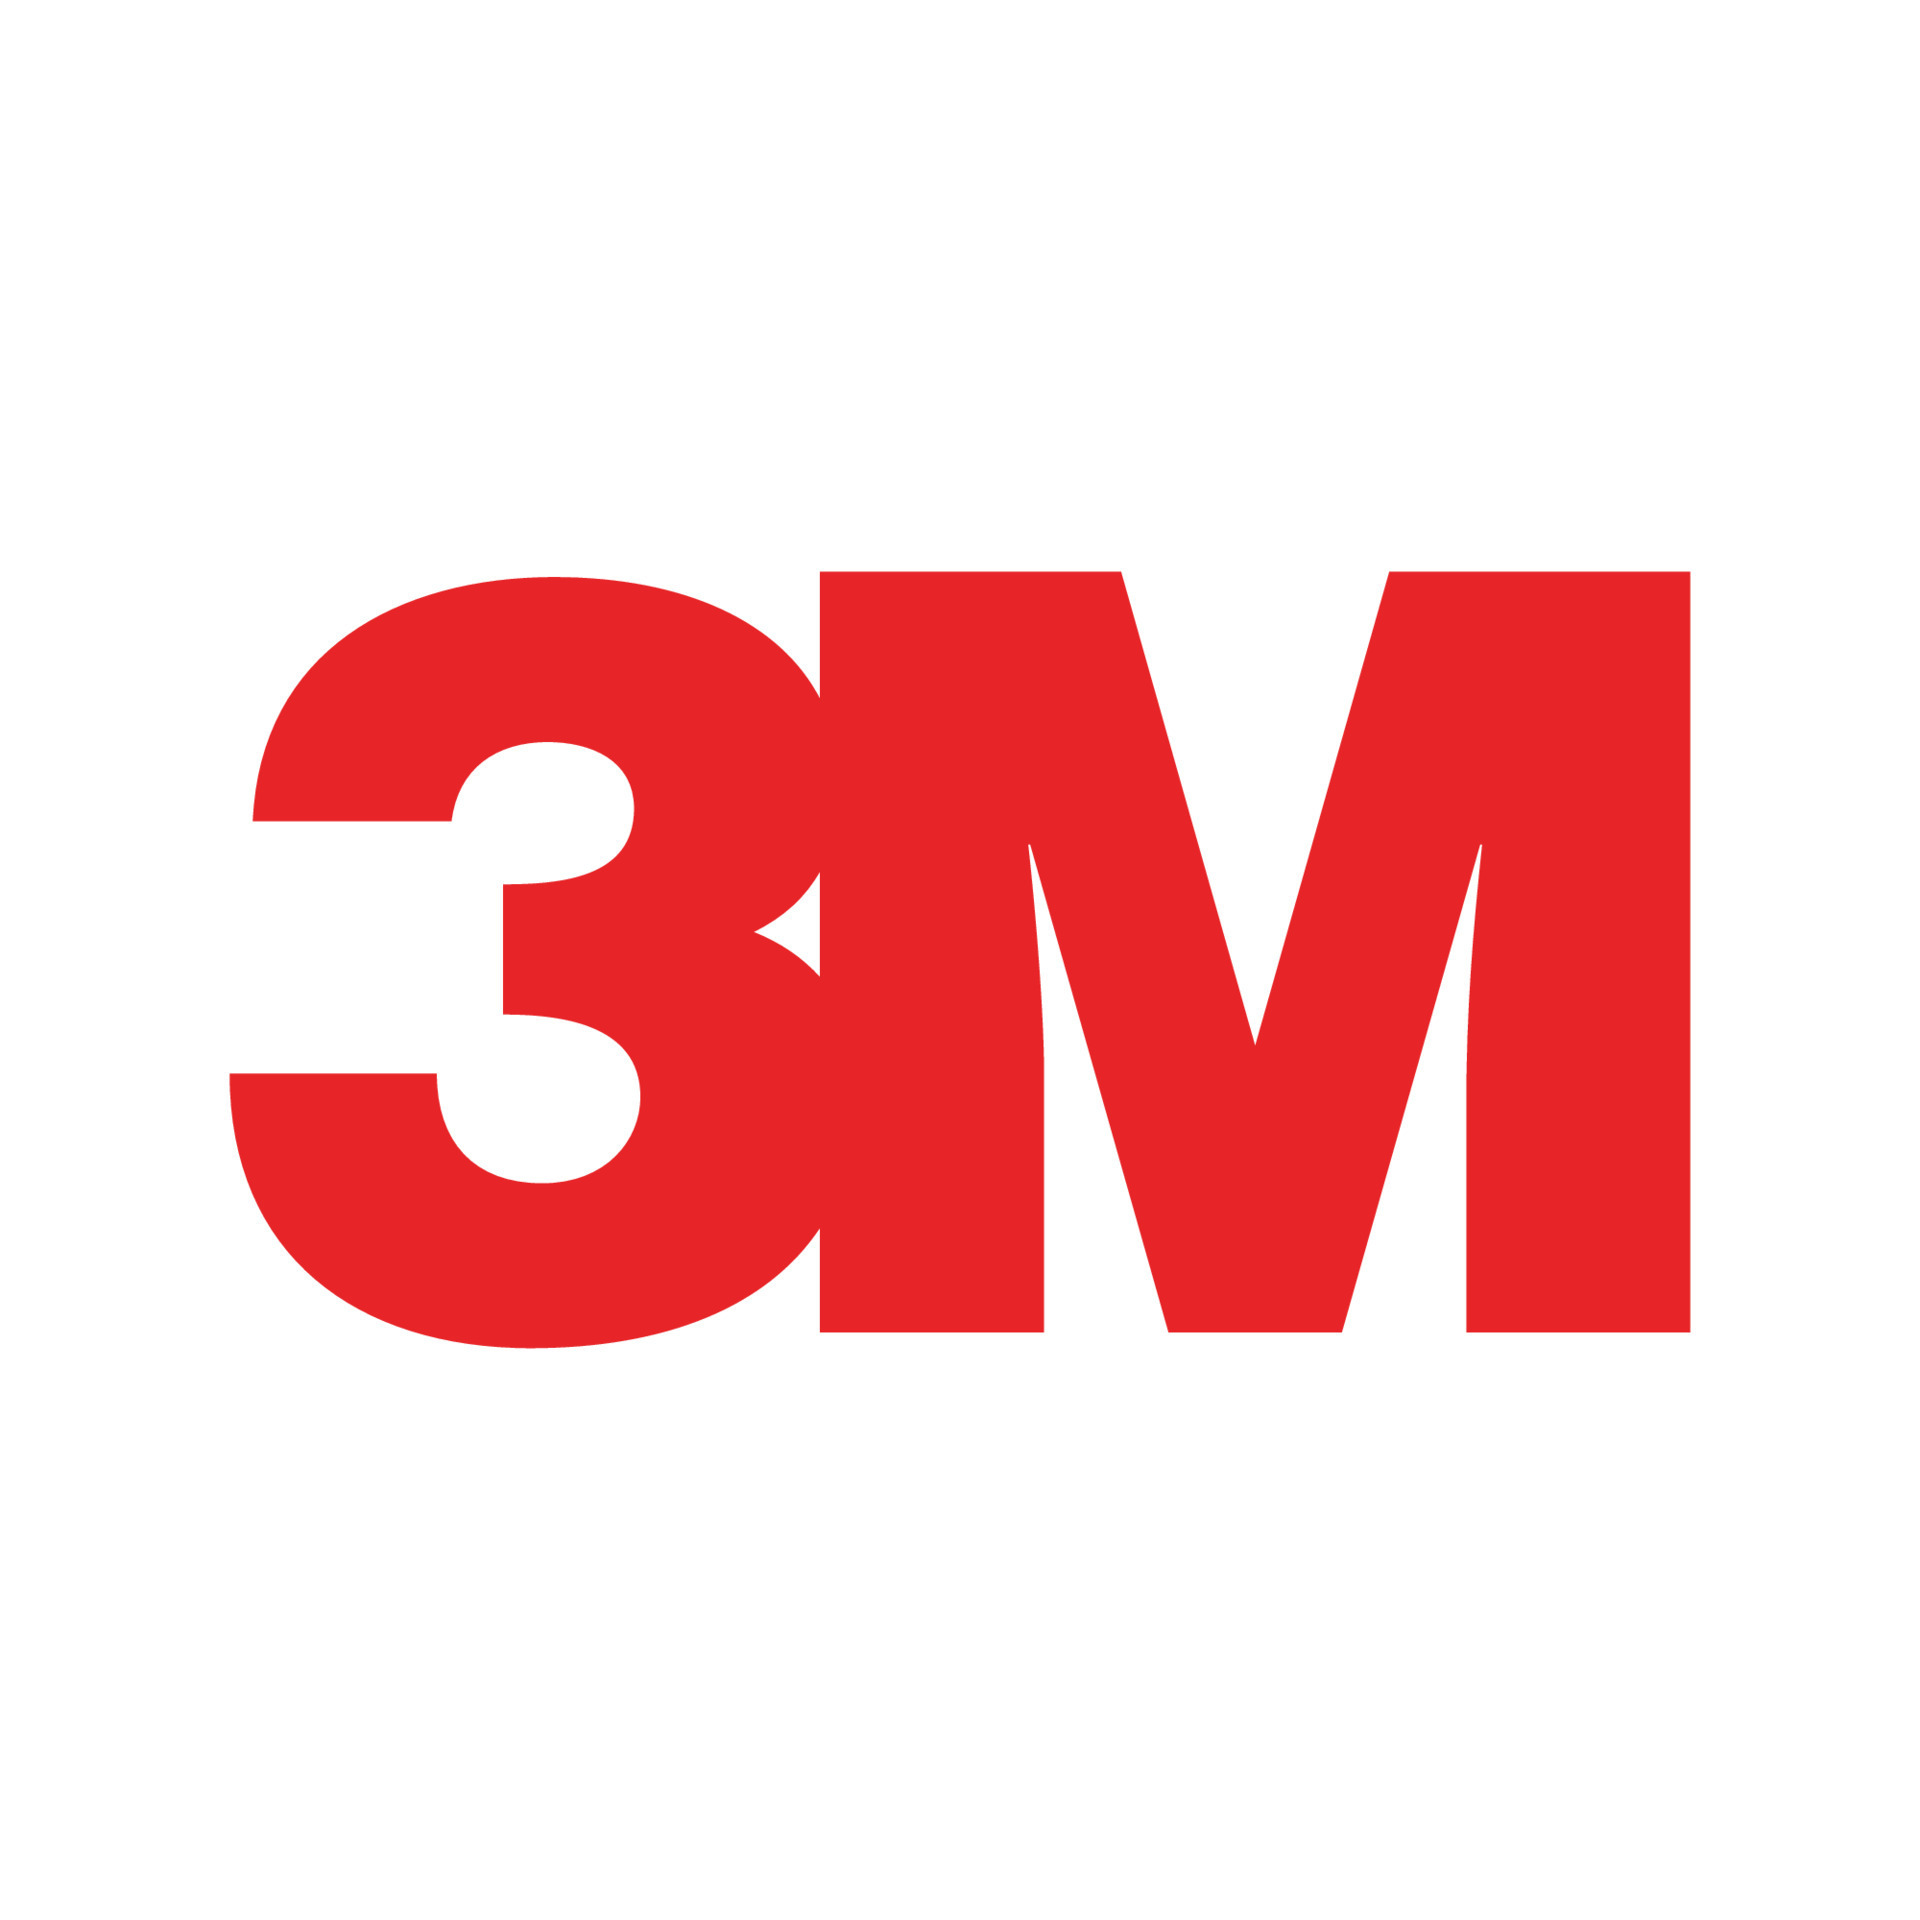 Brand: 3M